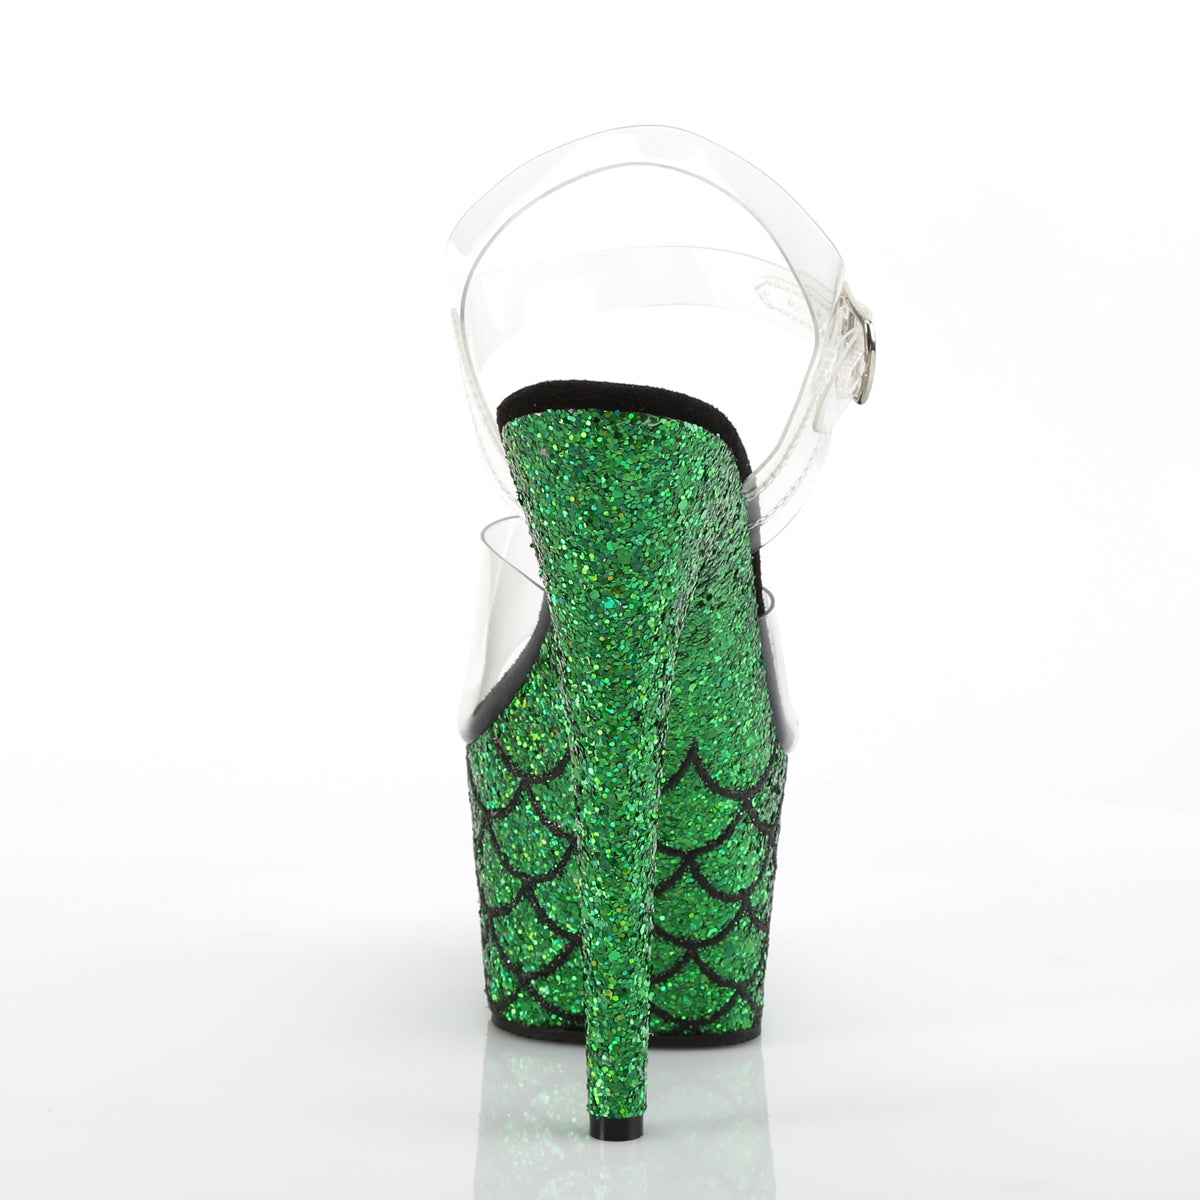 Pleaser Womens Sandals ADORE-708MSLG Clr/Green Multi Glitter